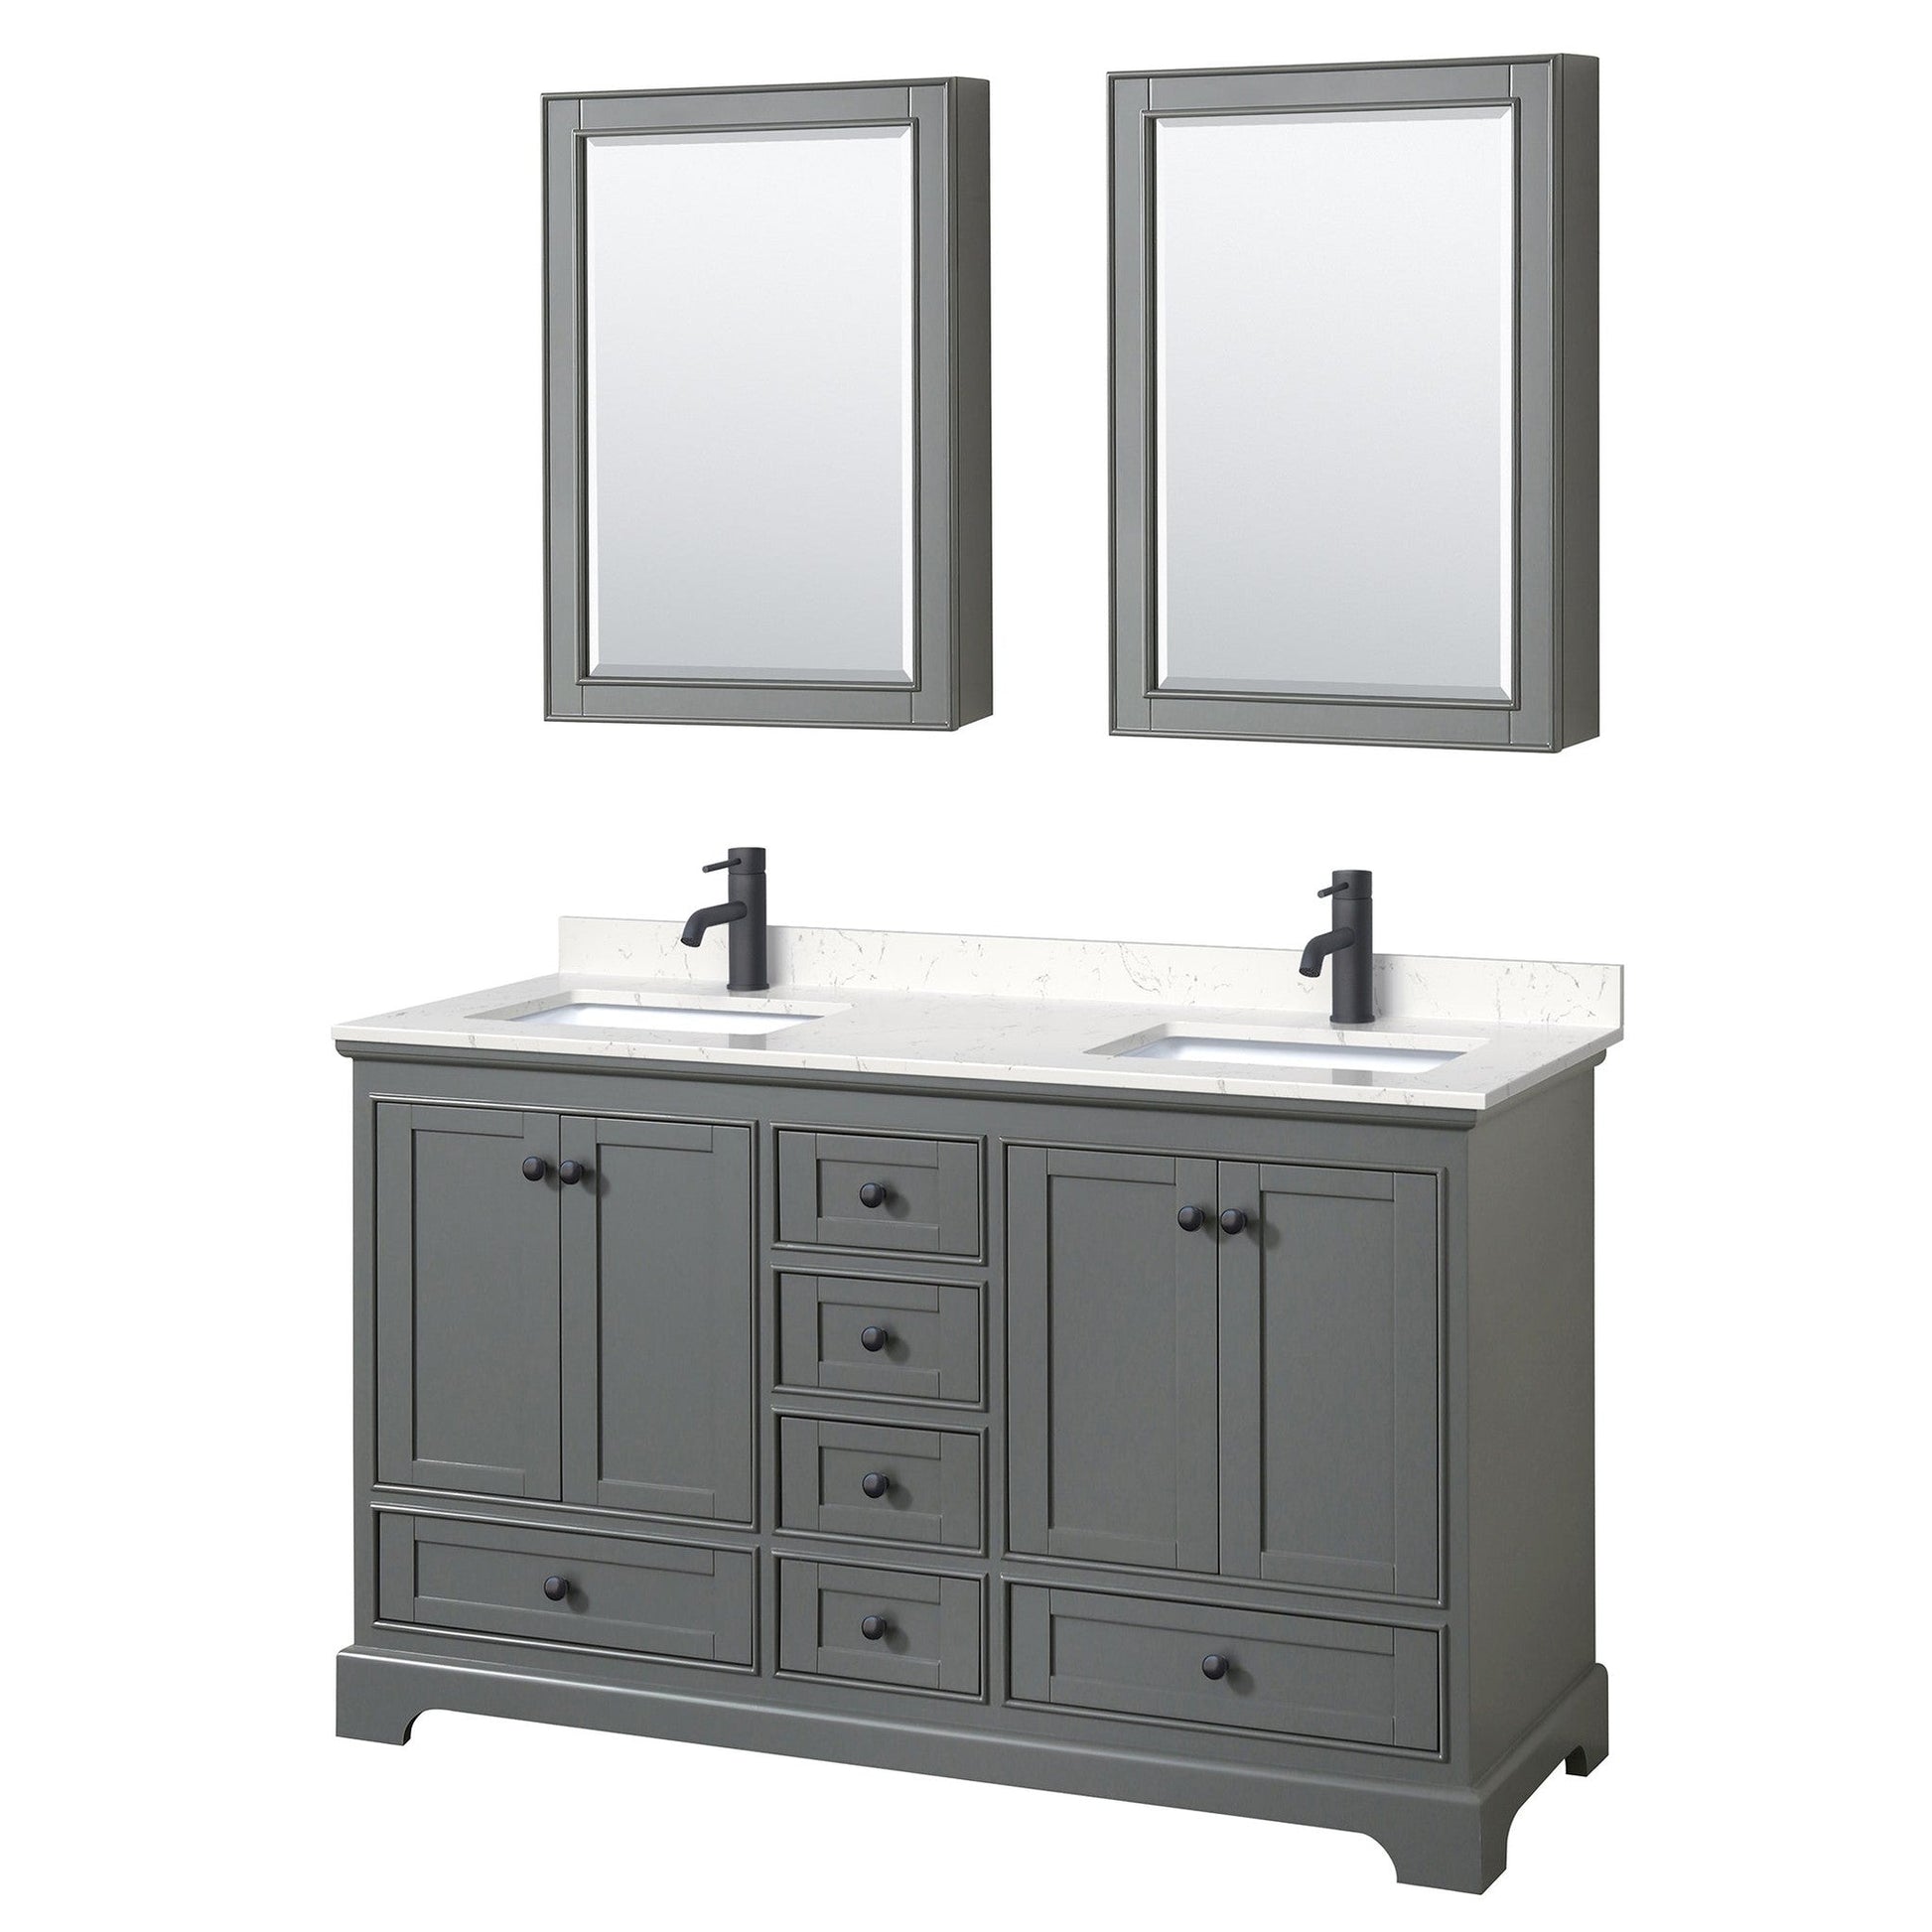 Deborah 60" Double Bathroom Vanity in Dark Gray, Carrara Cultured Marble Countertop, Undermount Square Sinks, Matte Black Trim, Medicine Cabinets